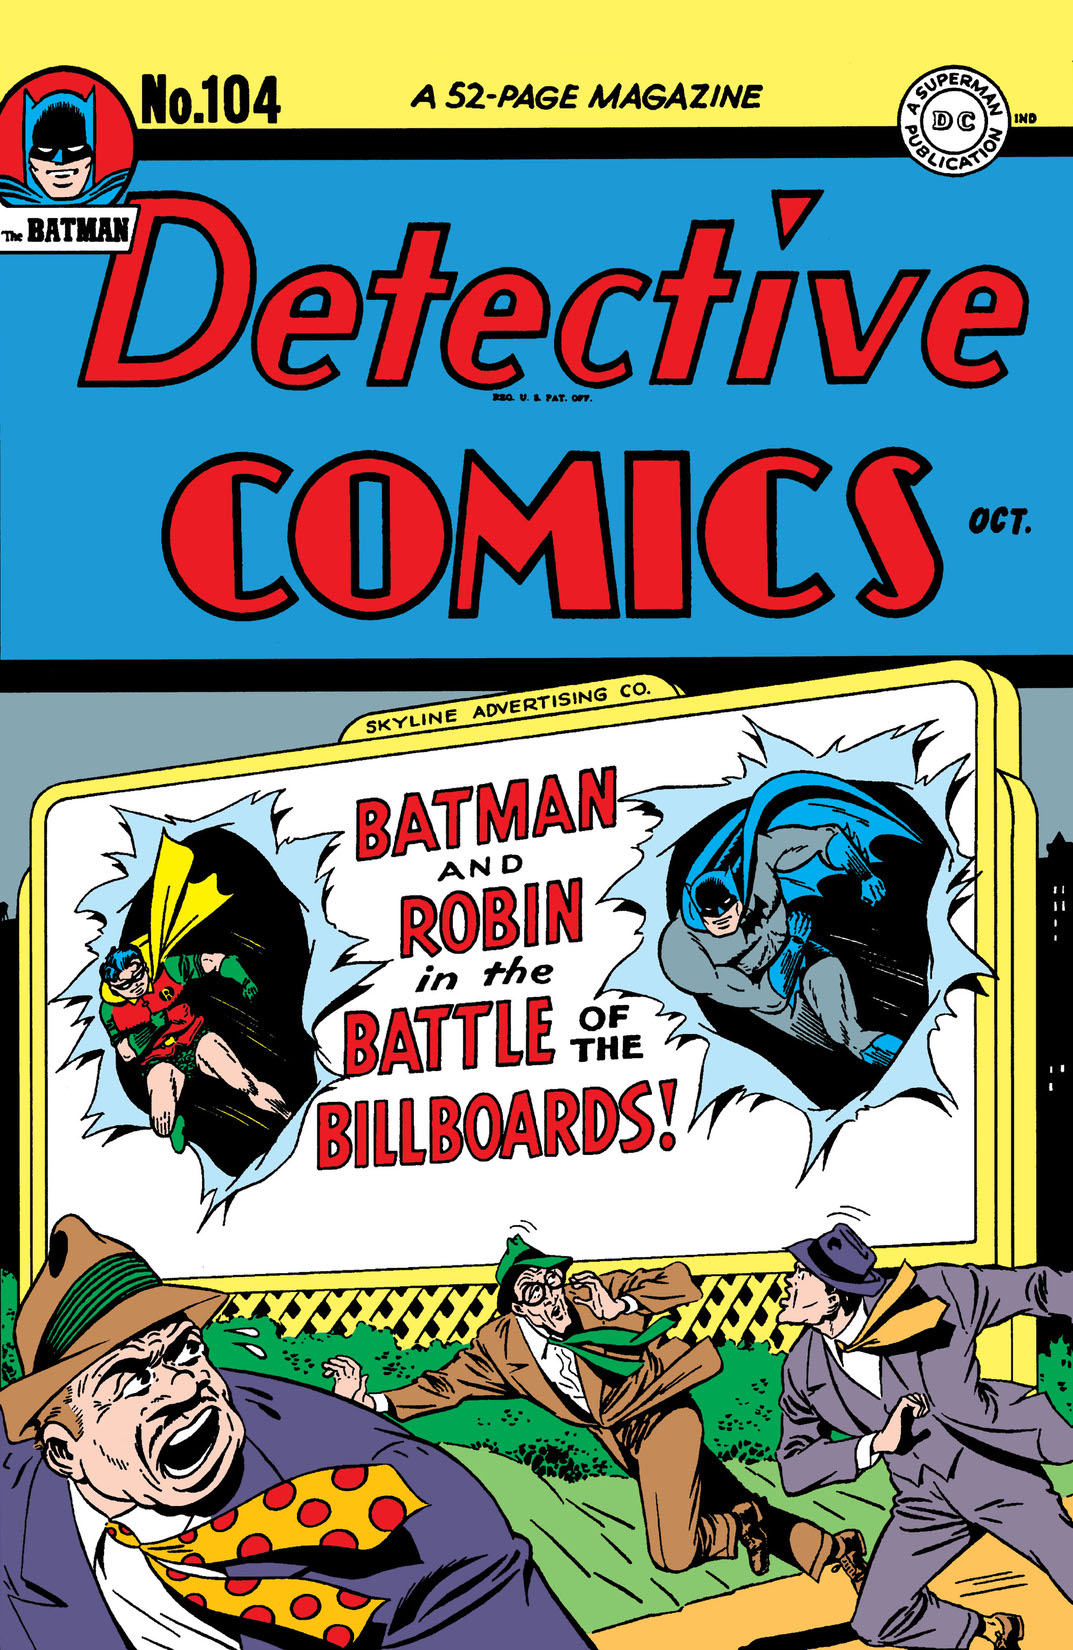 Detective Comics (1937-) #104 preview images